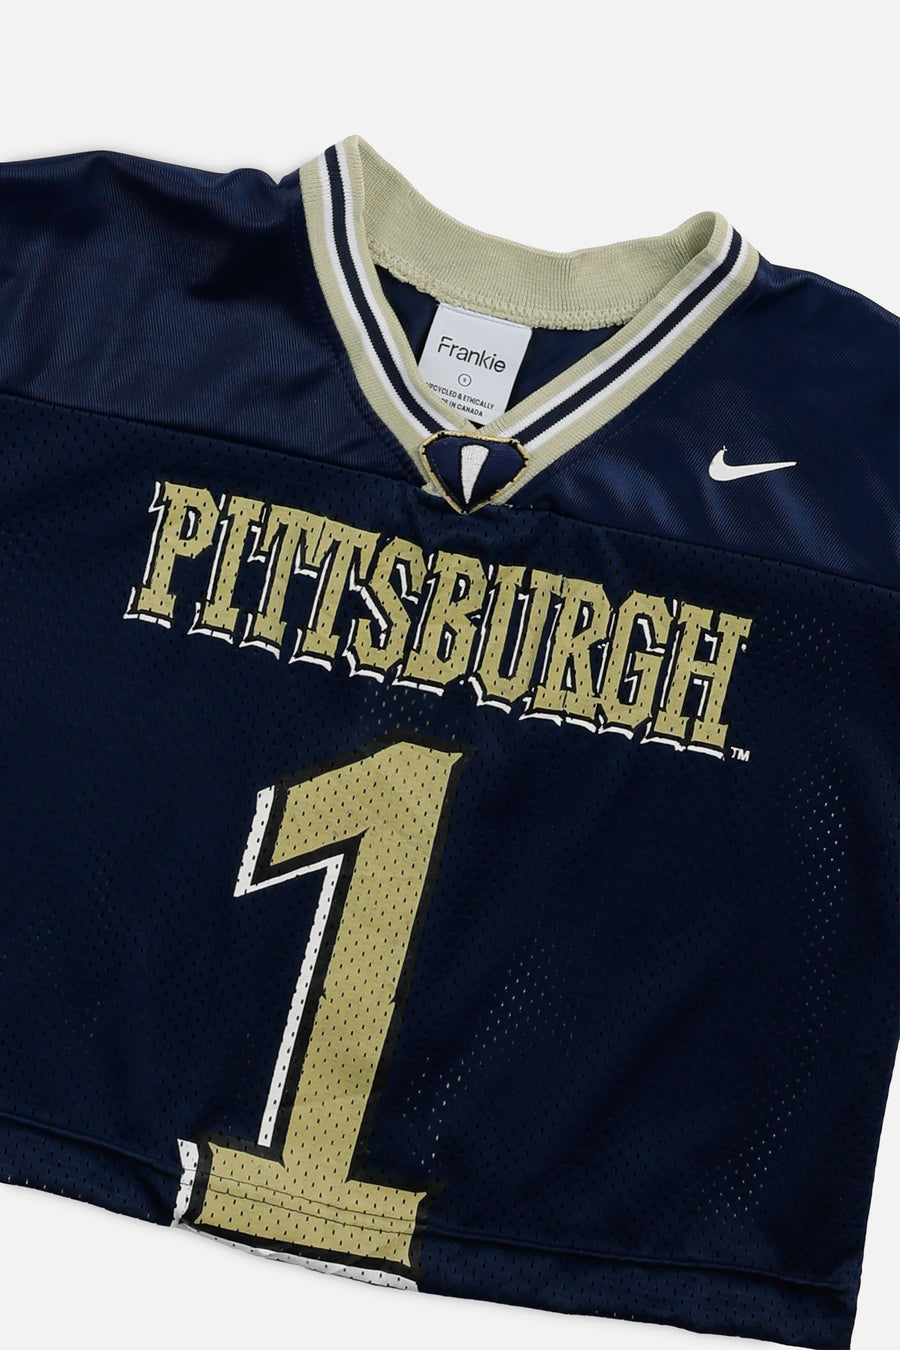 Rework Crop Pittsburgh Panthers Football Jersey - S